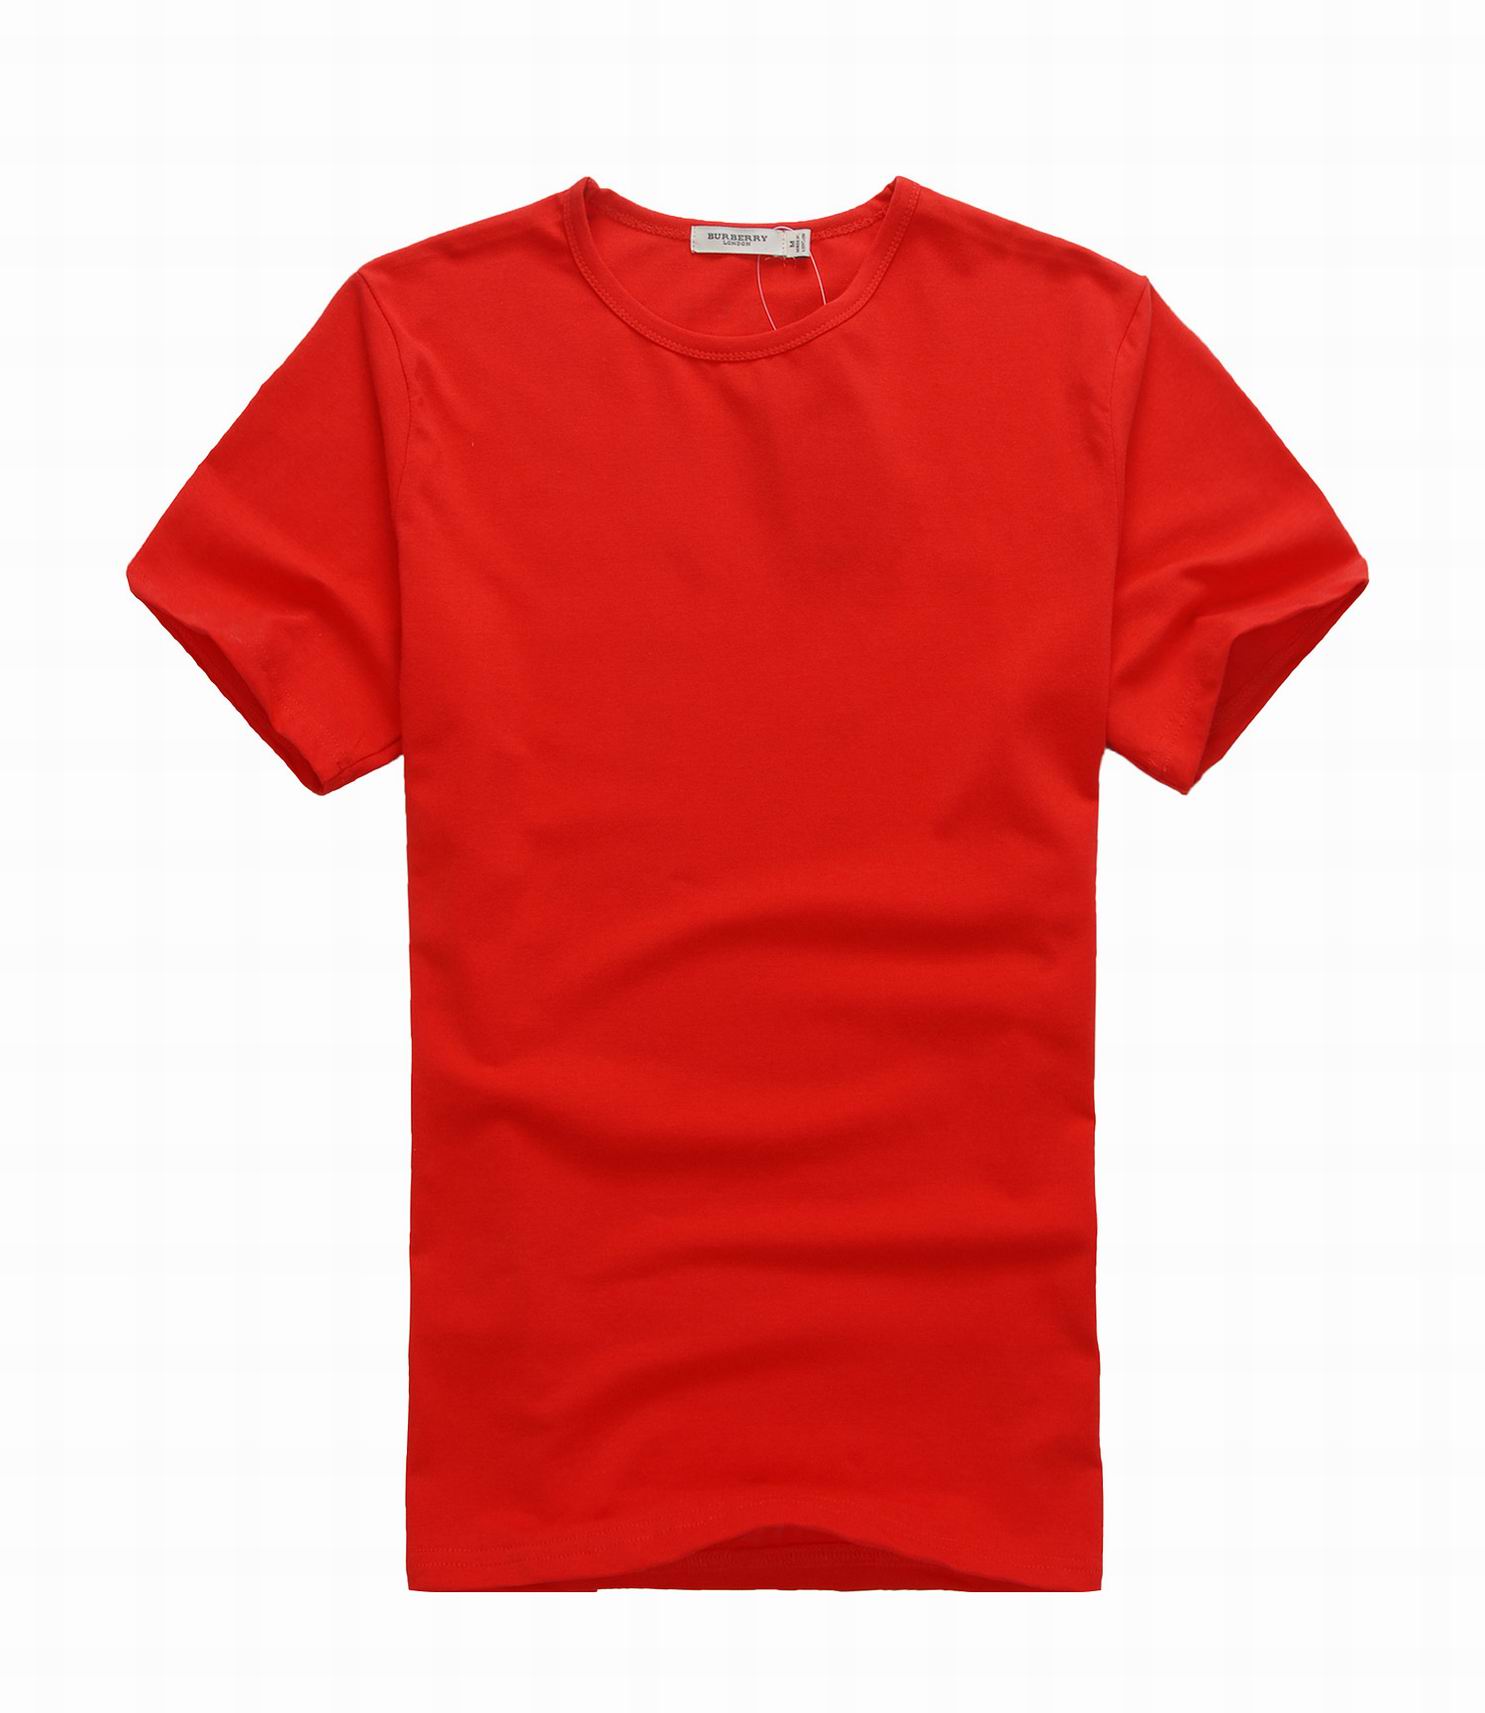 red t shirt clip art - photo #47